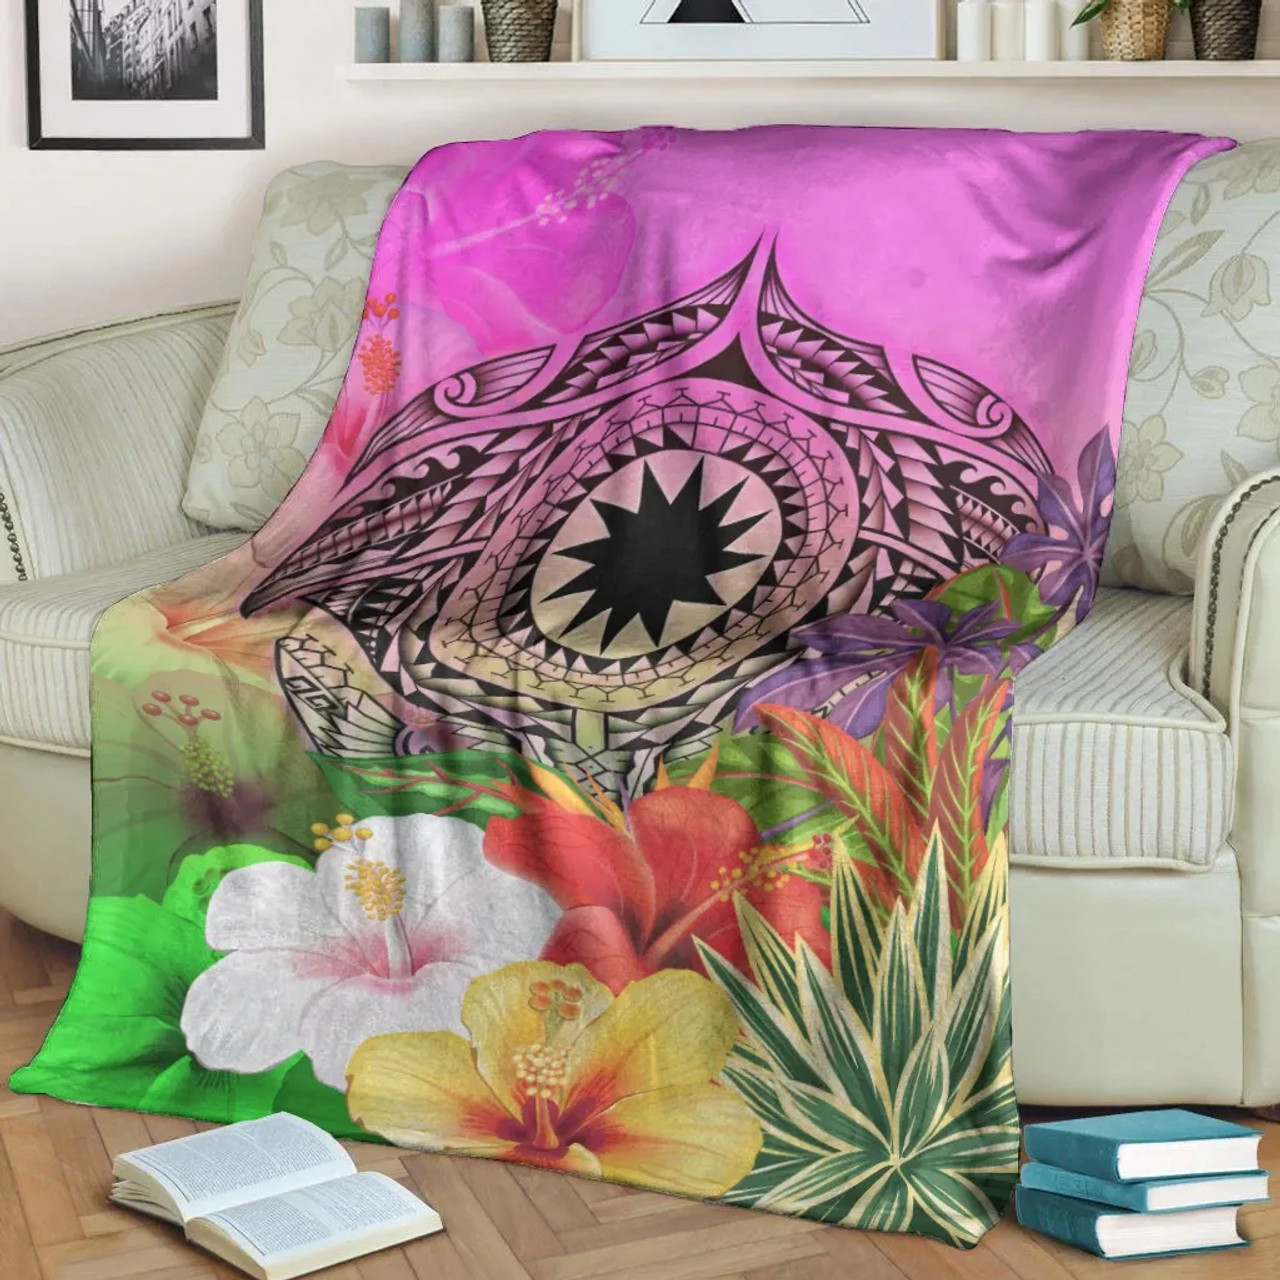 Nauru Polynesian Premium Blanket - Manta Ray Tropical Flowers 3